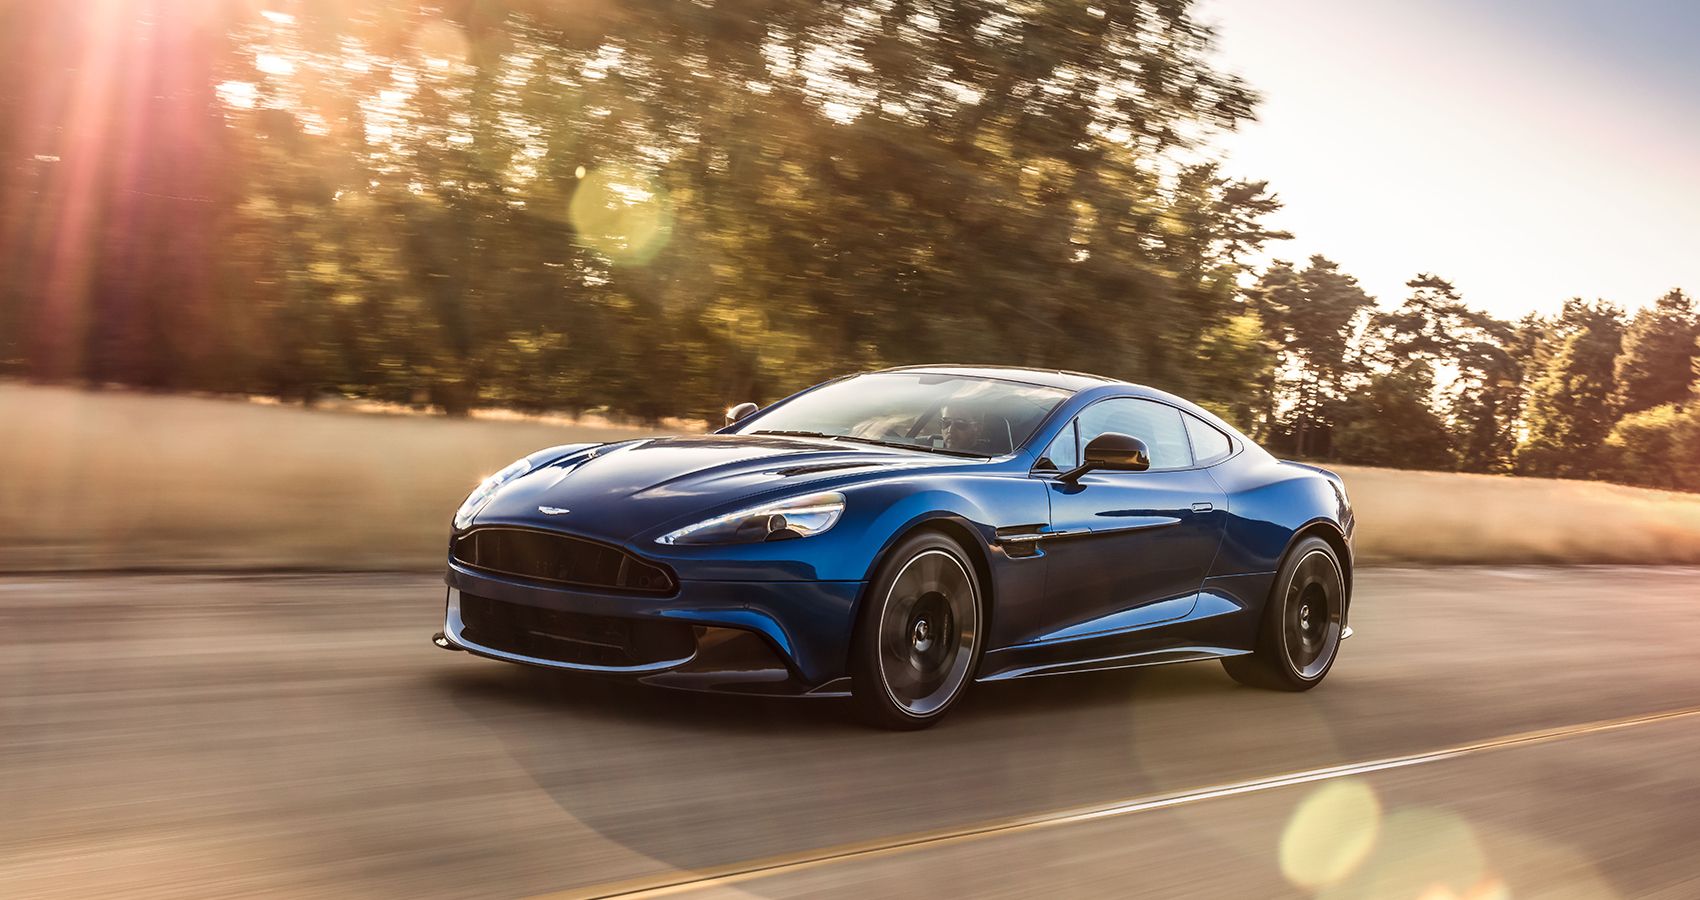 Blue Aston Martin Vanquish S Driving